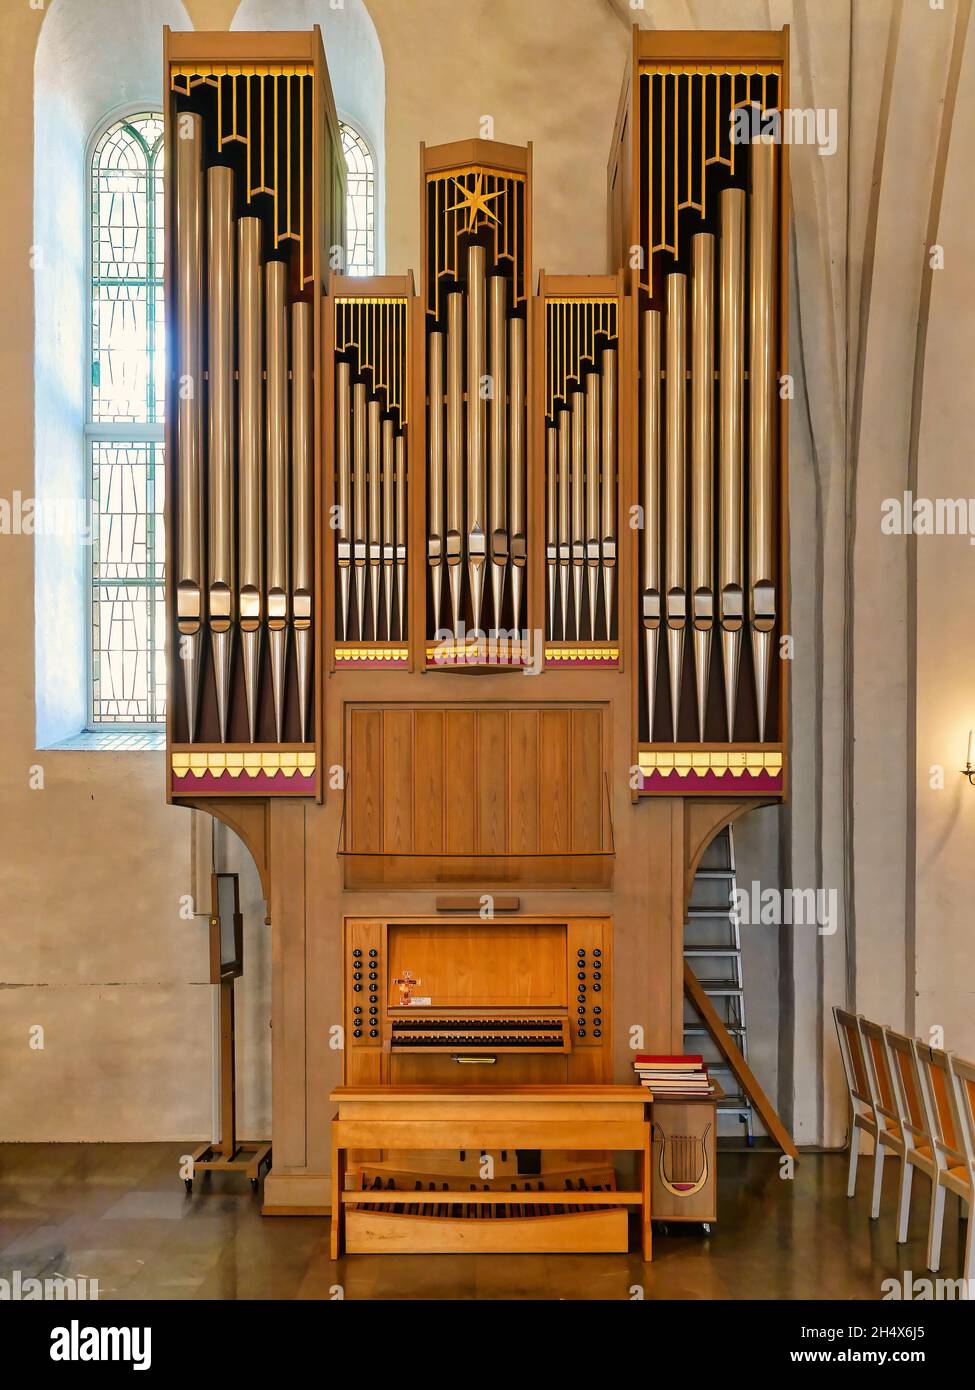 large church pipe organ keyboard music instrument interior church Stock Photo